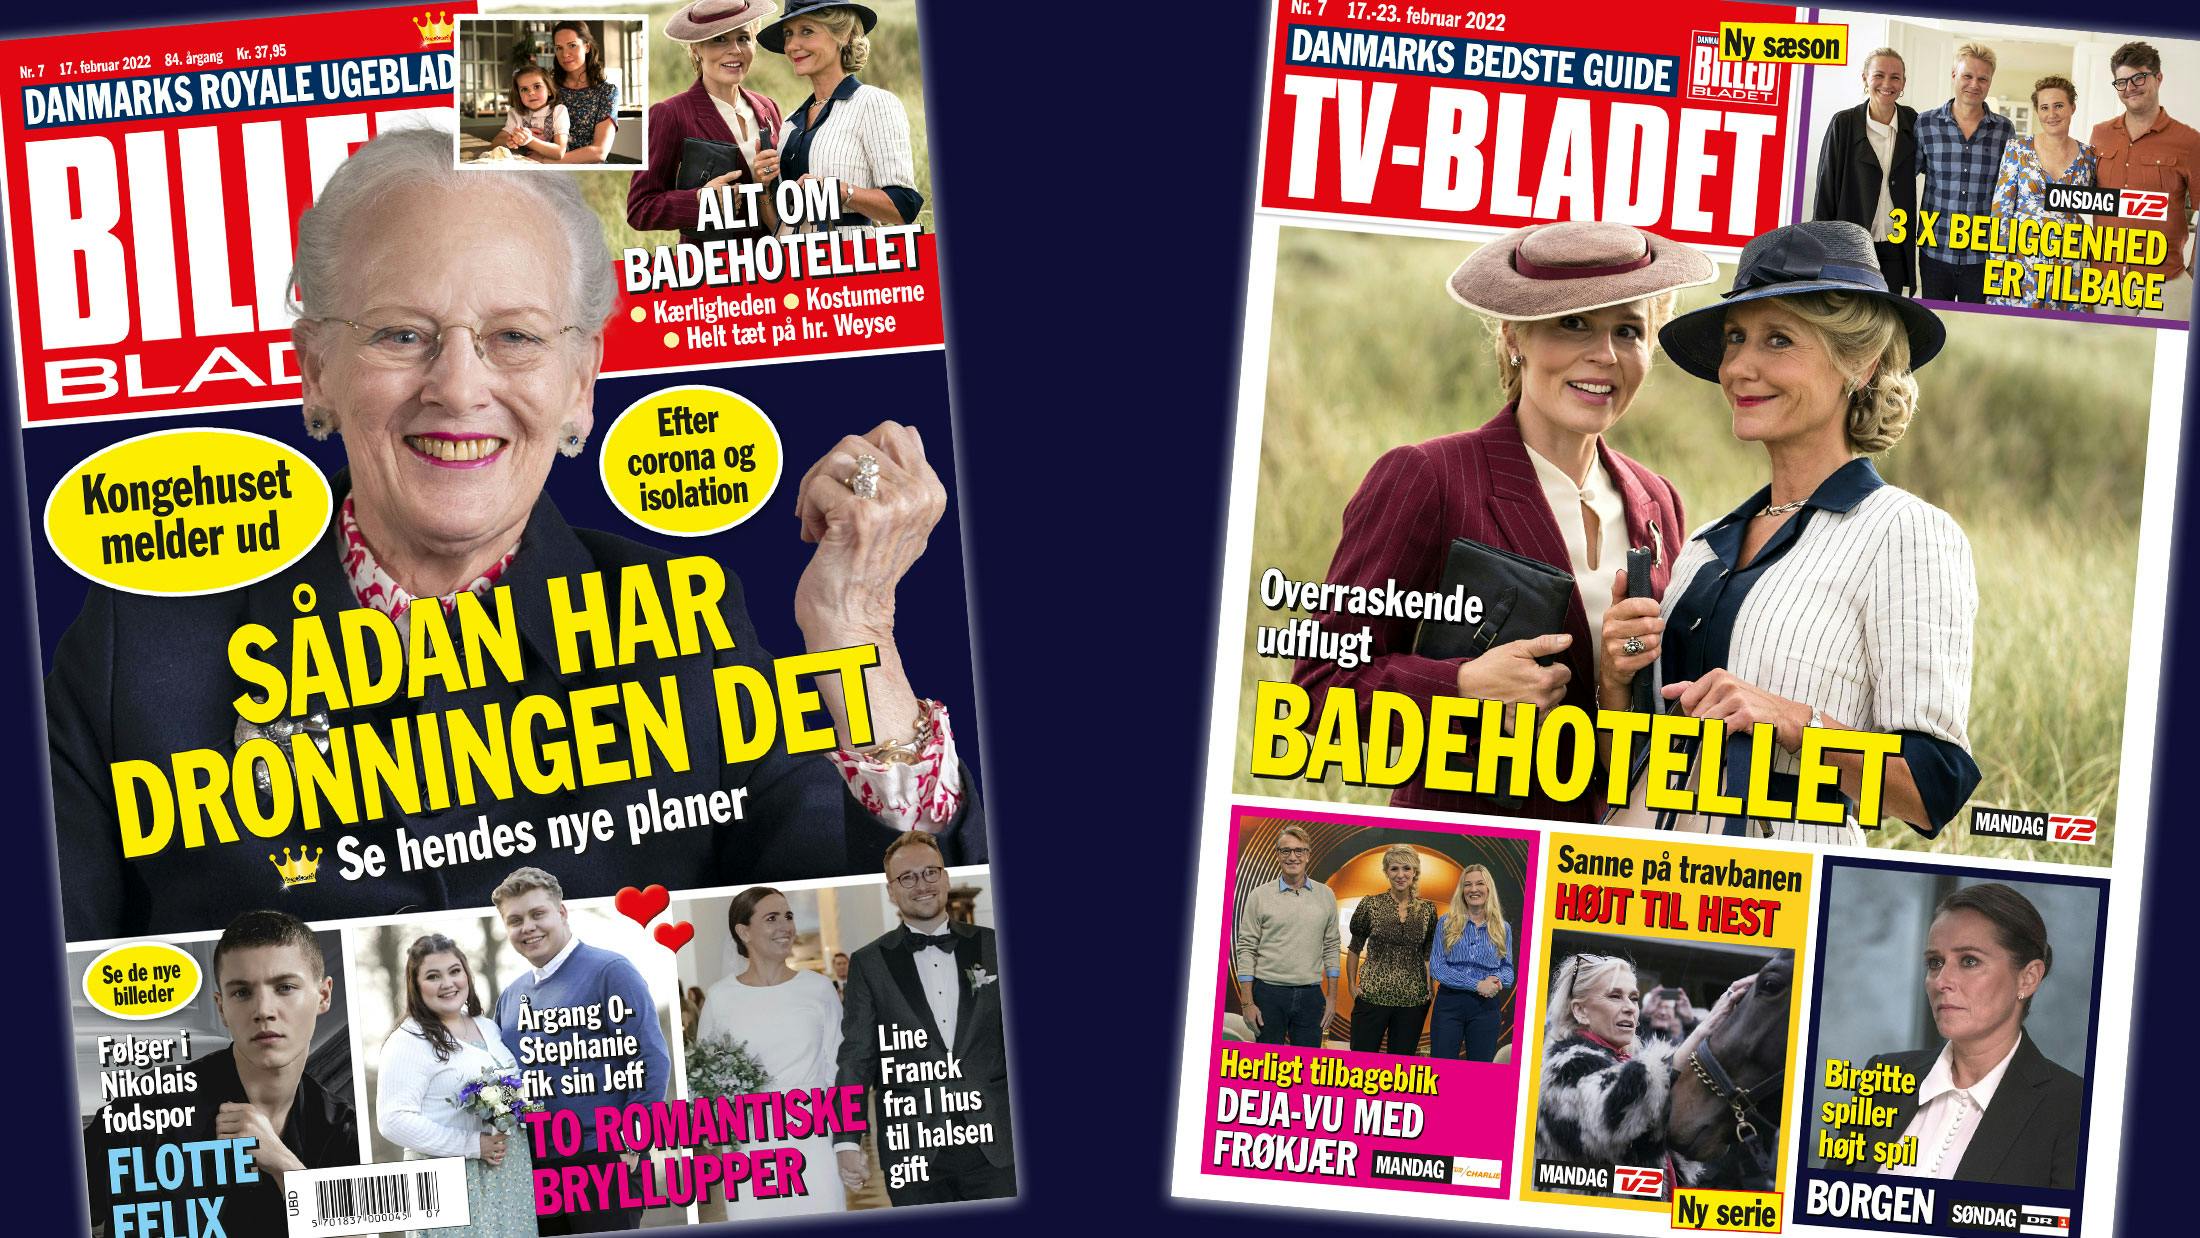 https://imgix.billedbladet.dk/media/article/webgrafik_bb07-forsider_1.jpg